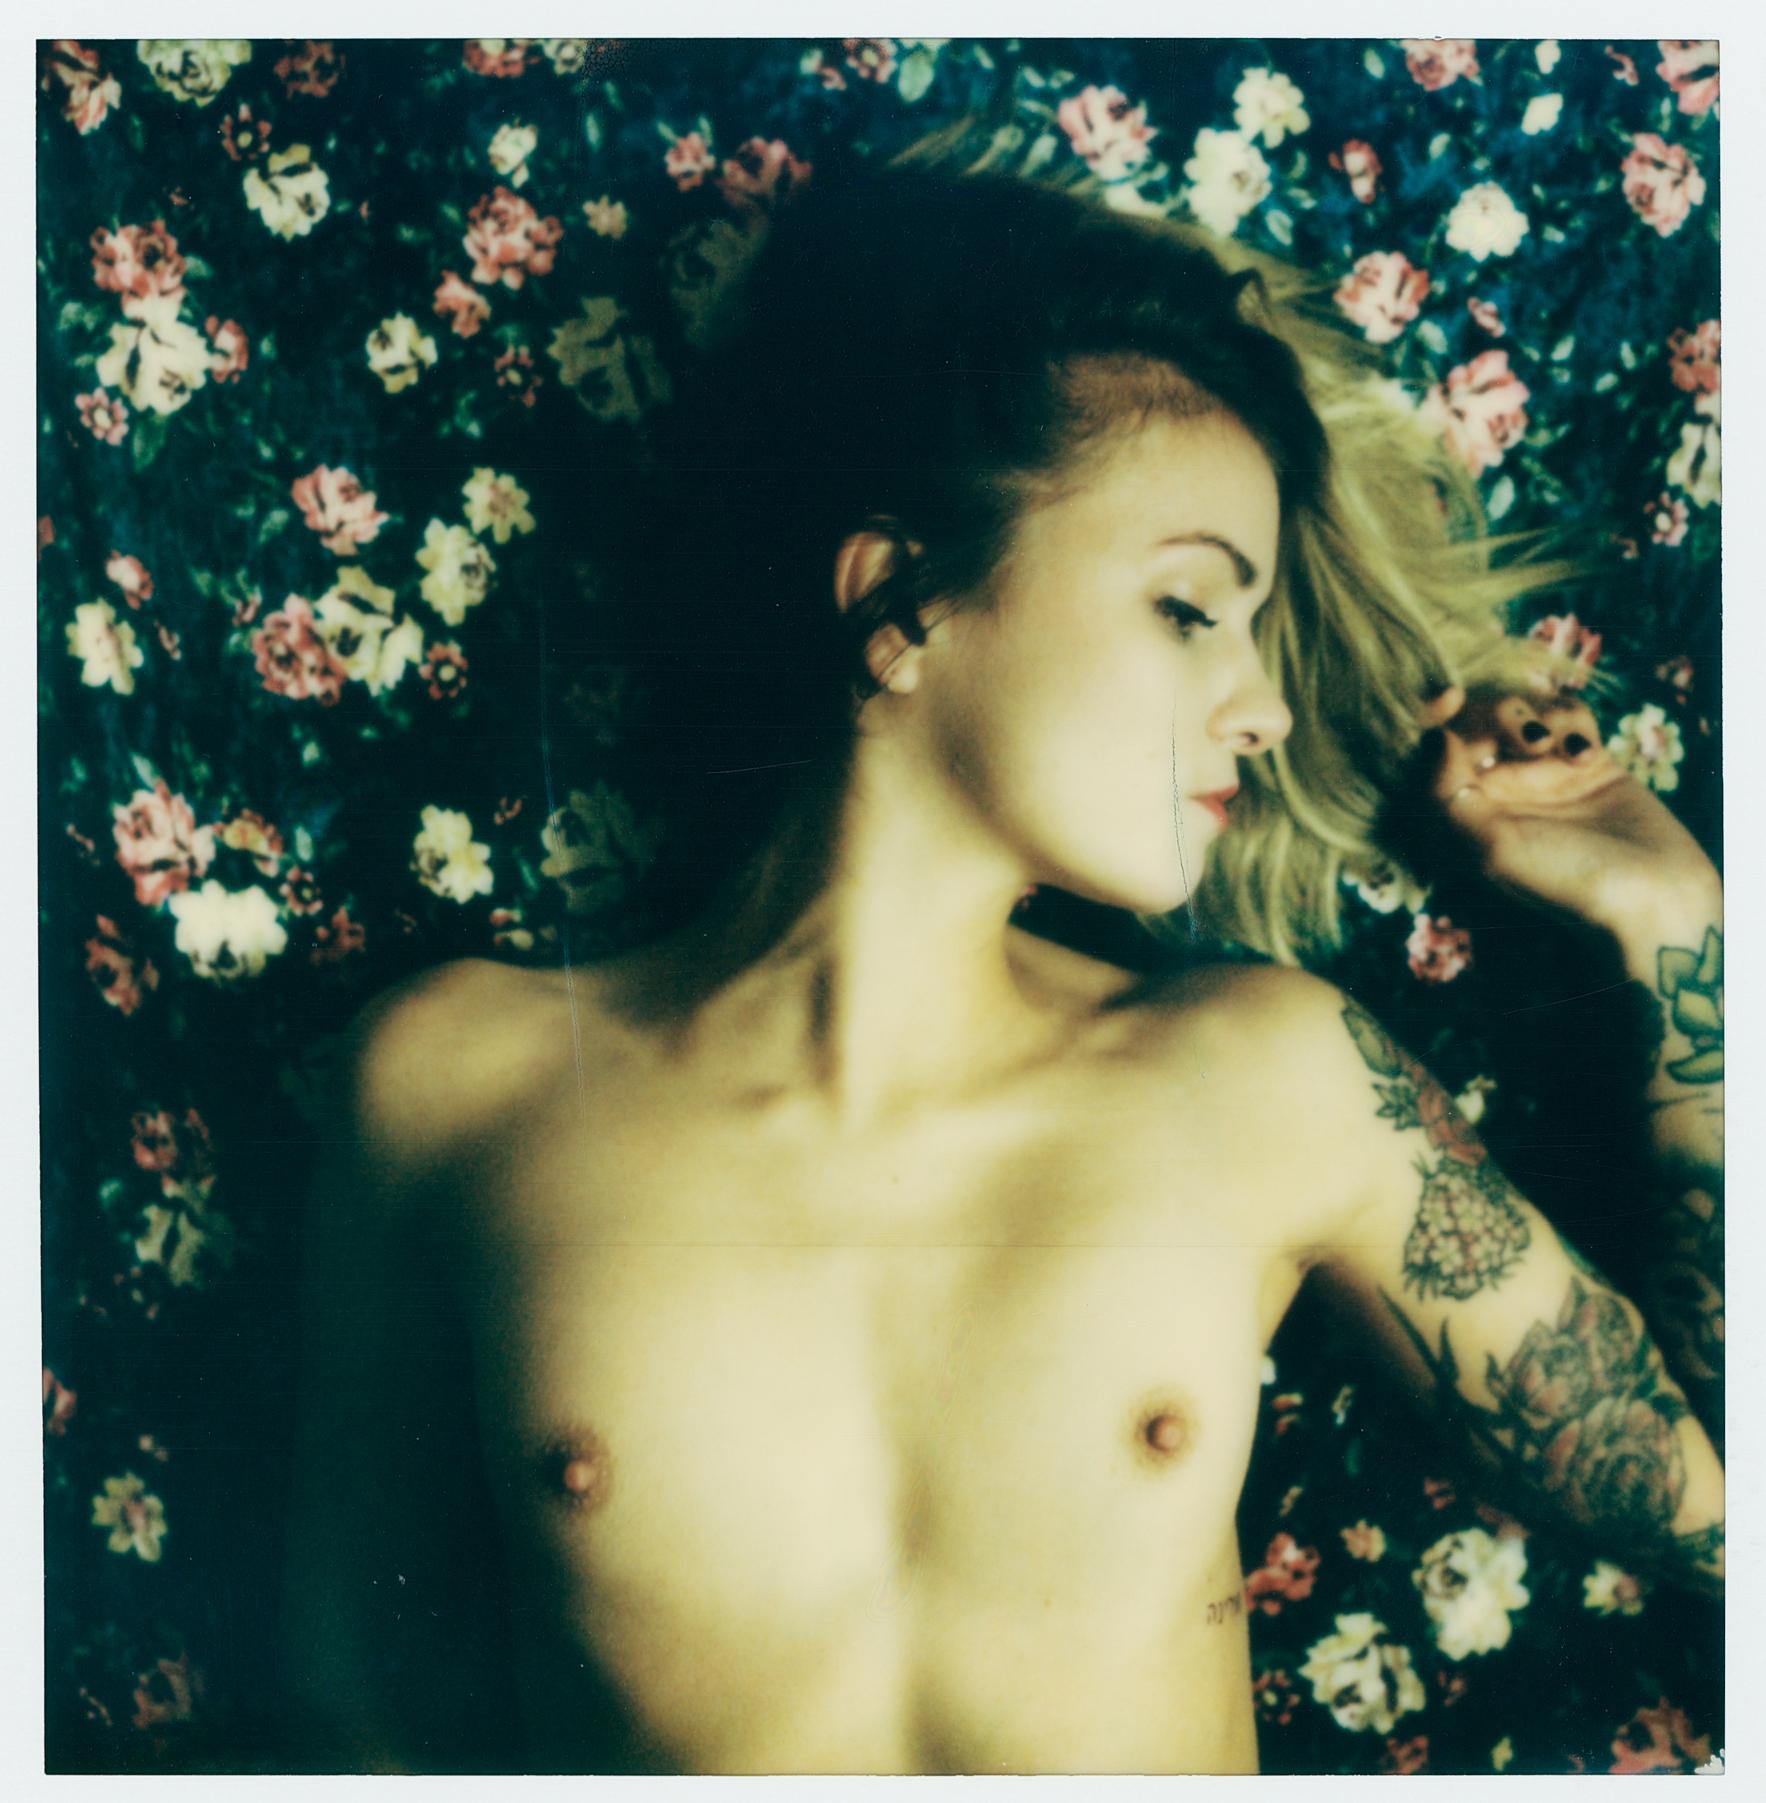 Ariel Shelleg Portrait Photograph - CLOSING TIME SESSIONS - 21st Century, Contemporary, Polaroid, Nude